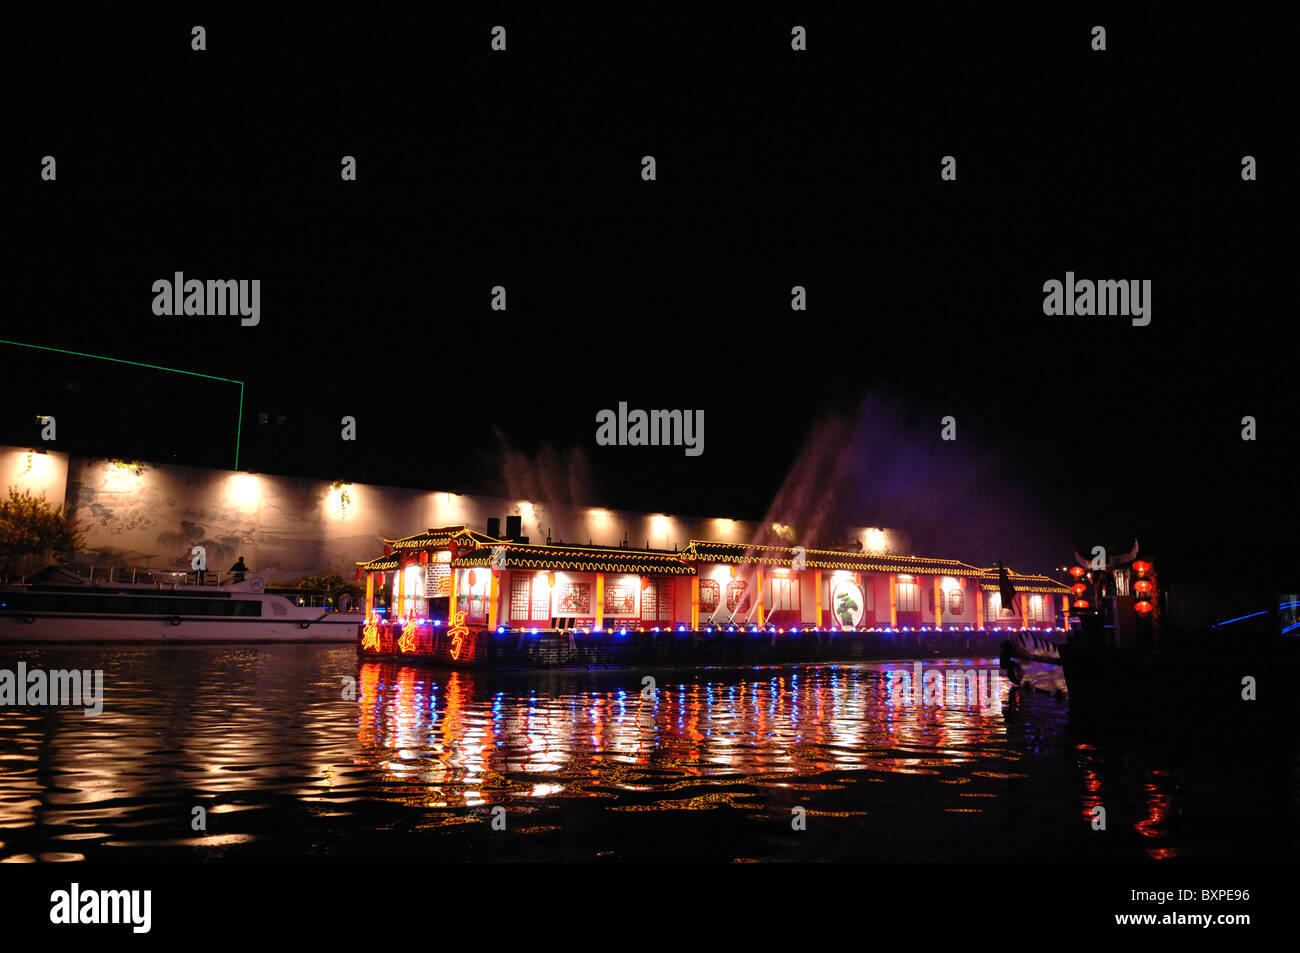 Traditional illuminated canal boat festival in Yangzhou Jiangsu Province of China Stock Photo